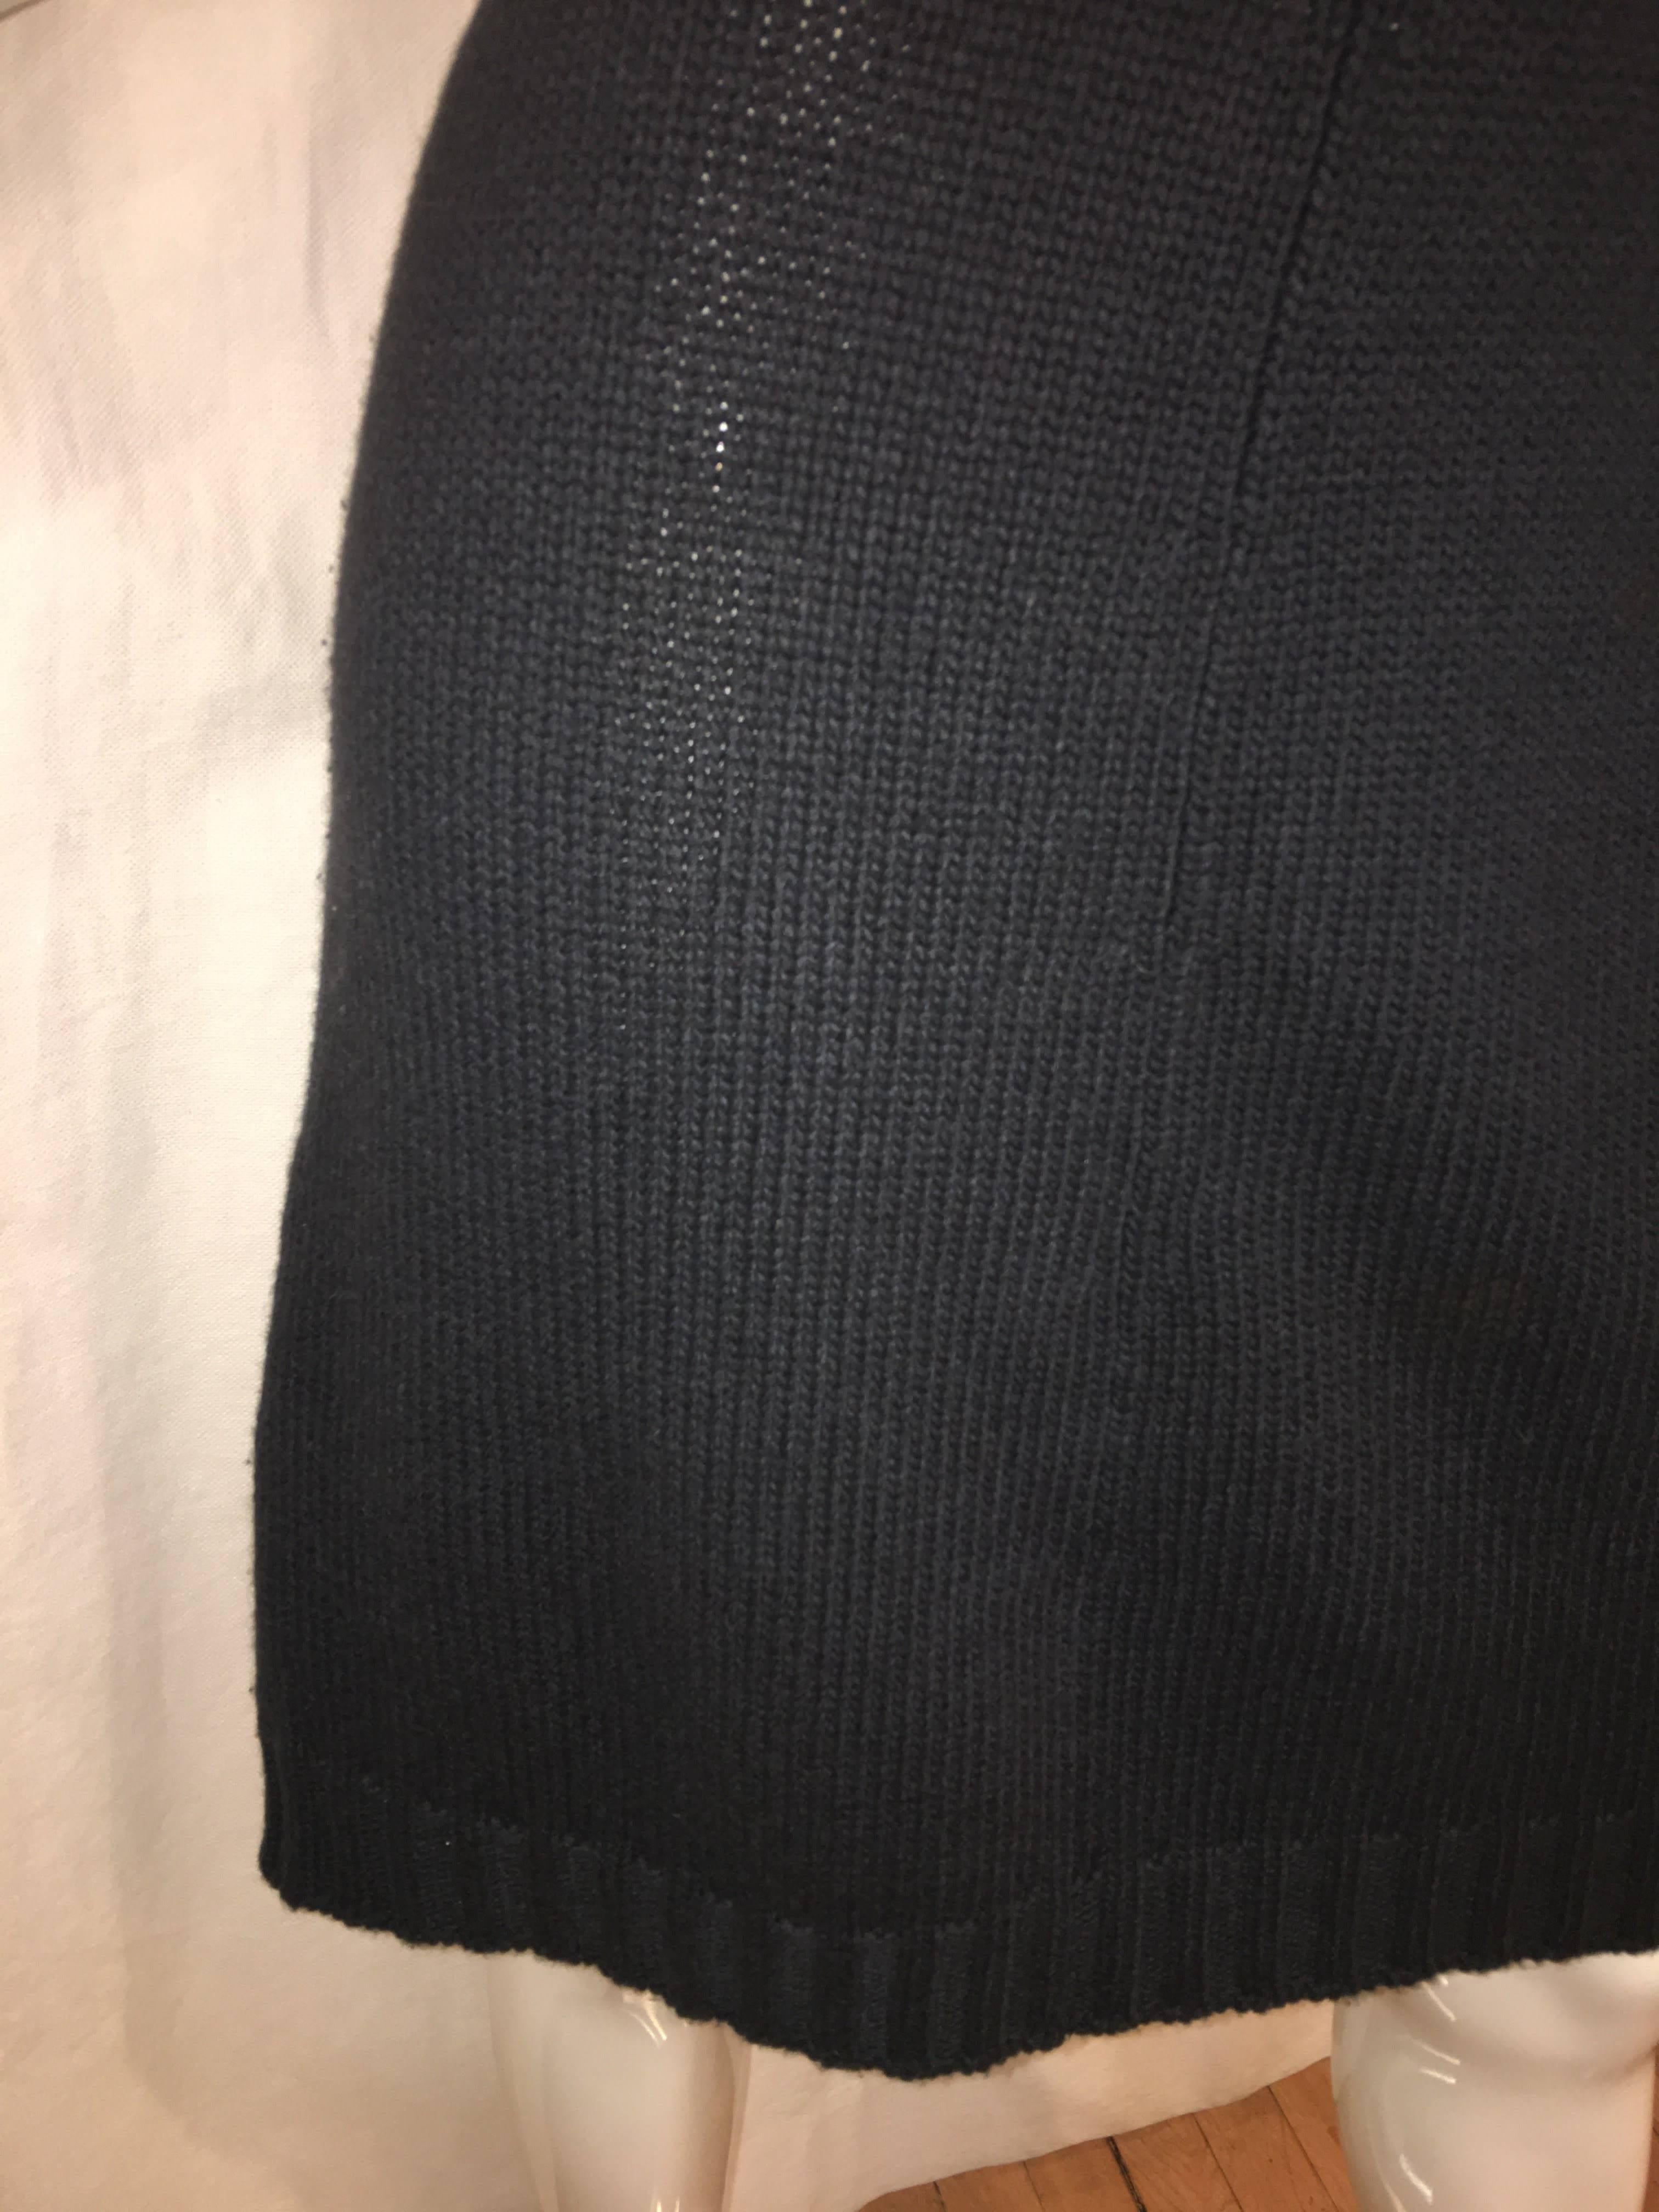 Black Hermes Cashmere Sweater Dress